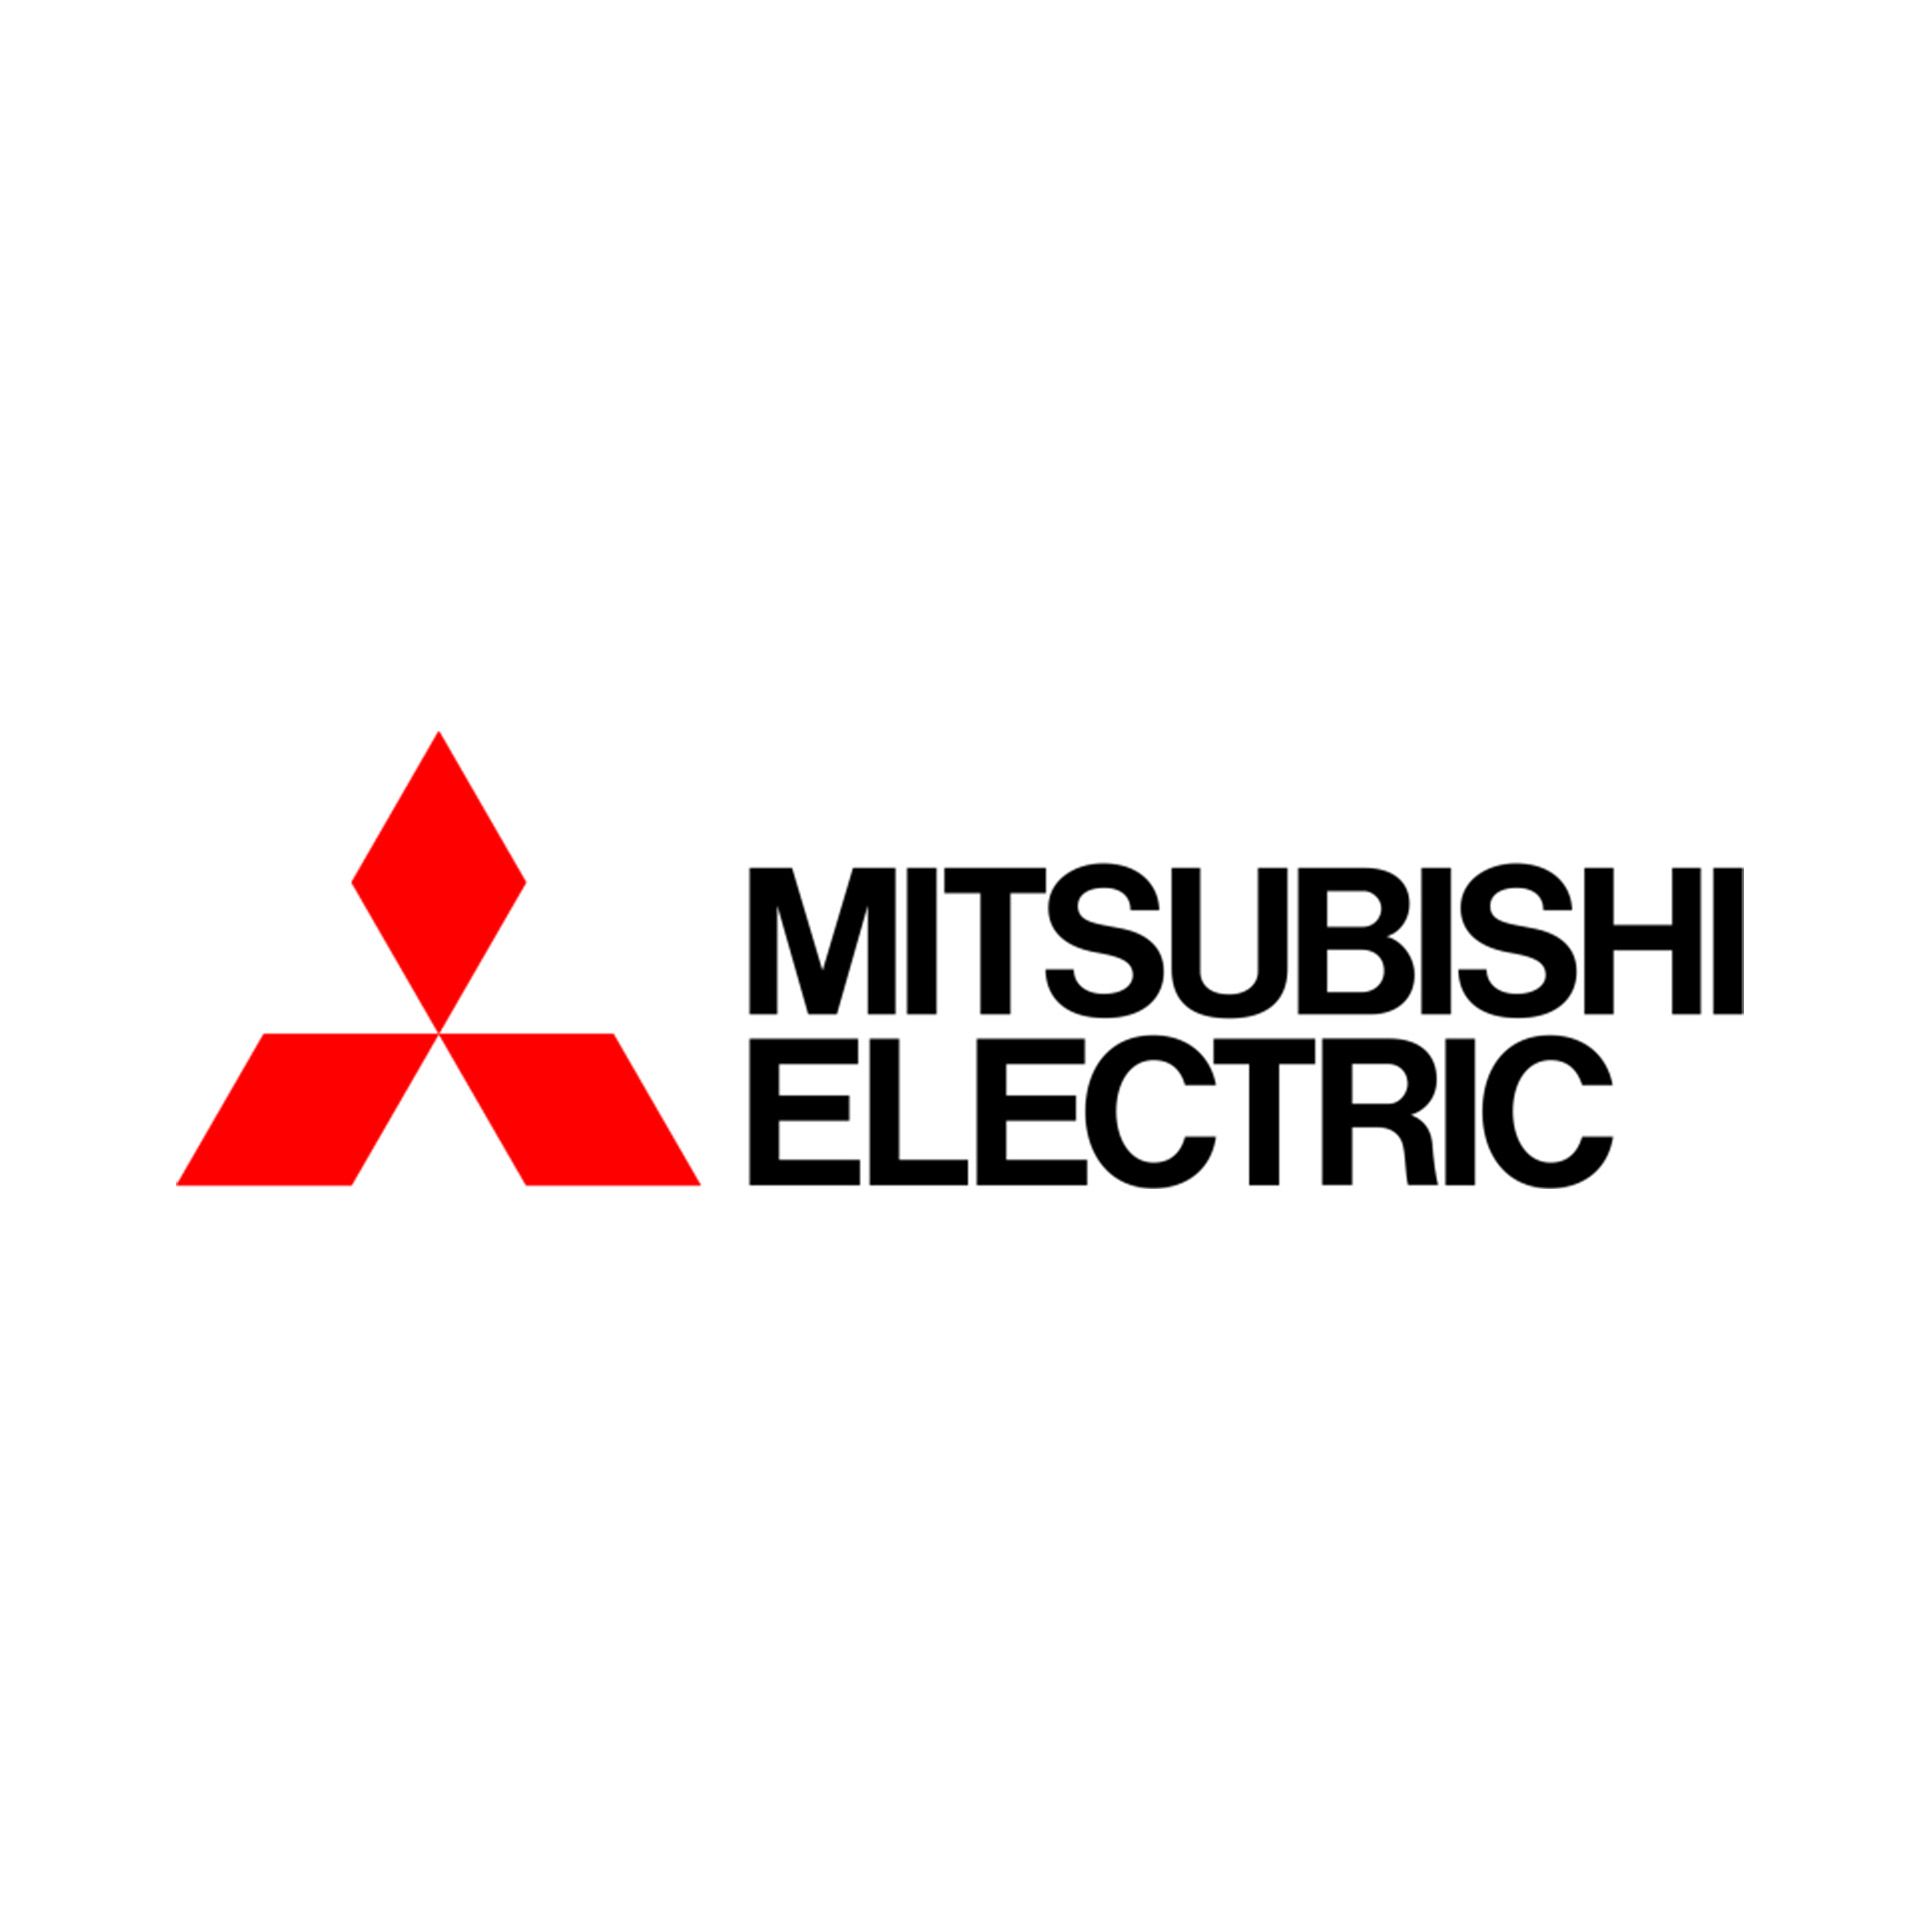 Mitsubishi Electric logo on white background